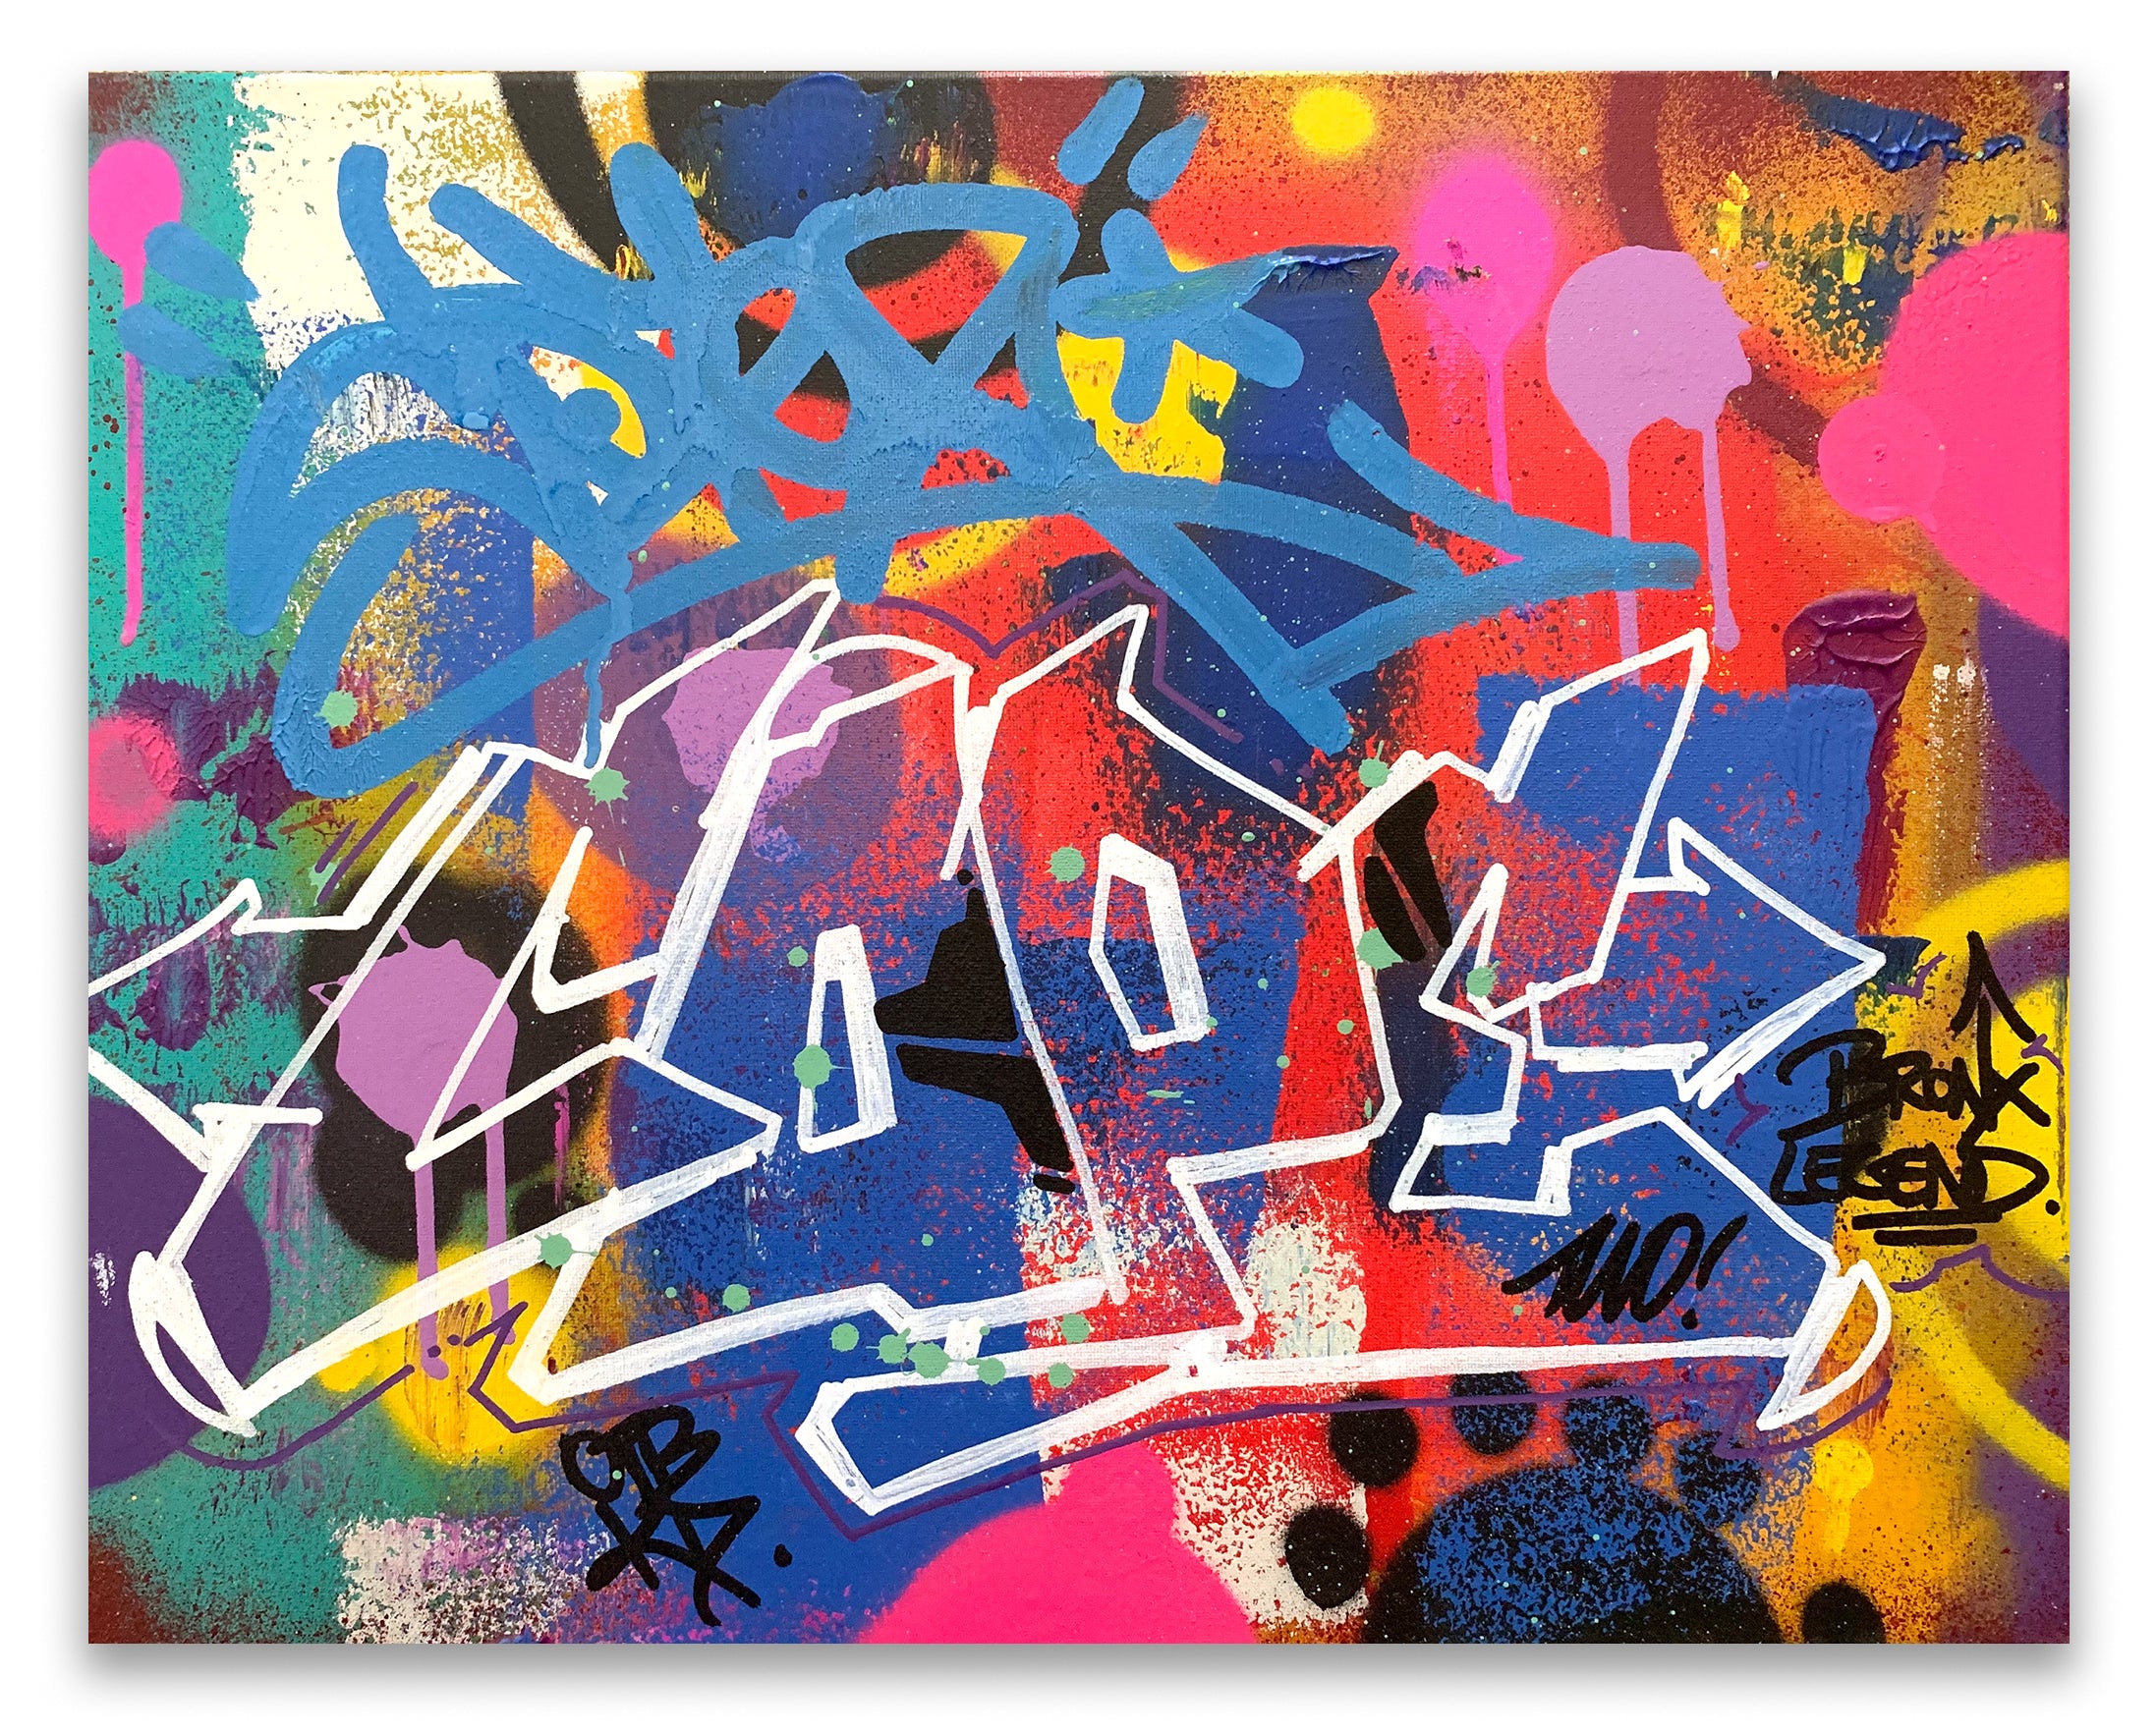 COPE2 - "Bronx Legend Wild style" Painting